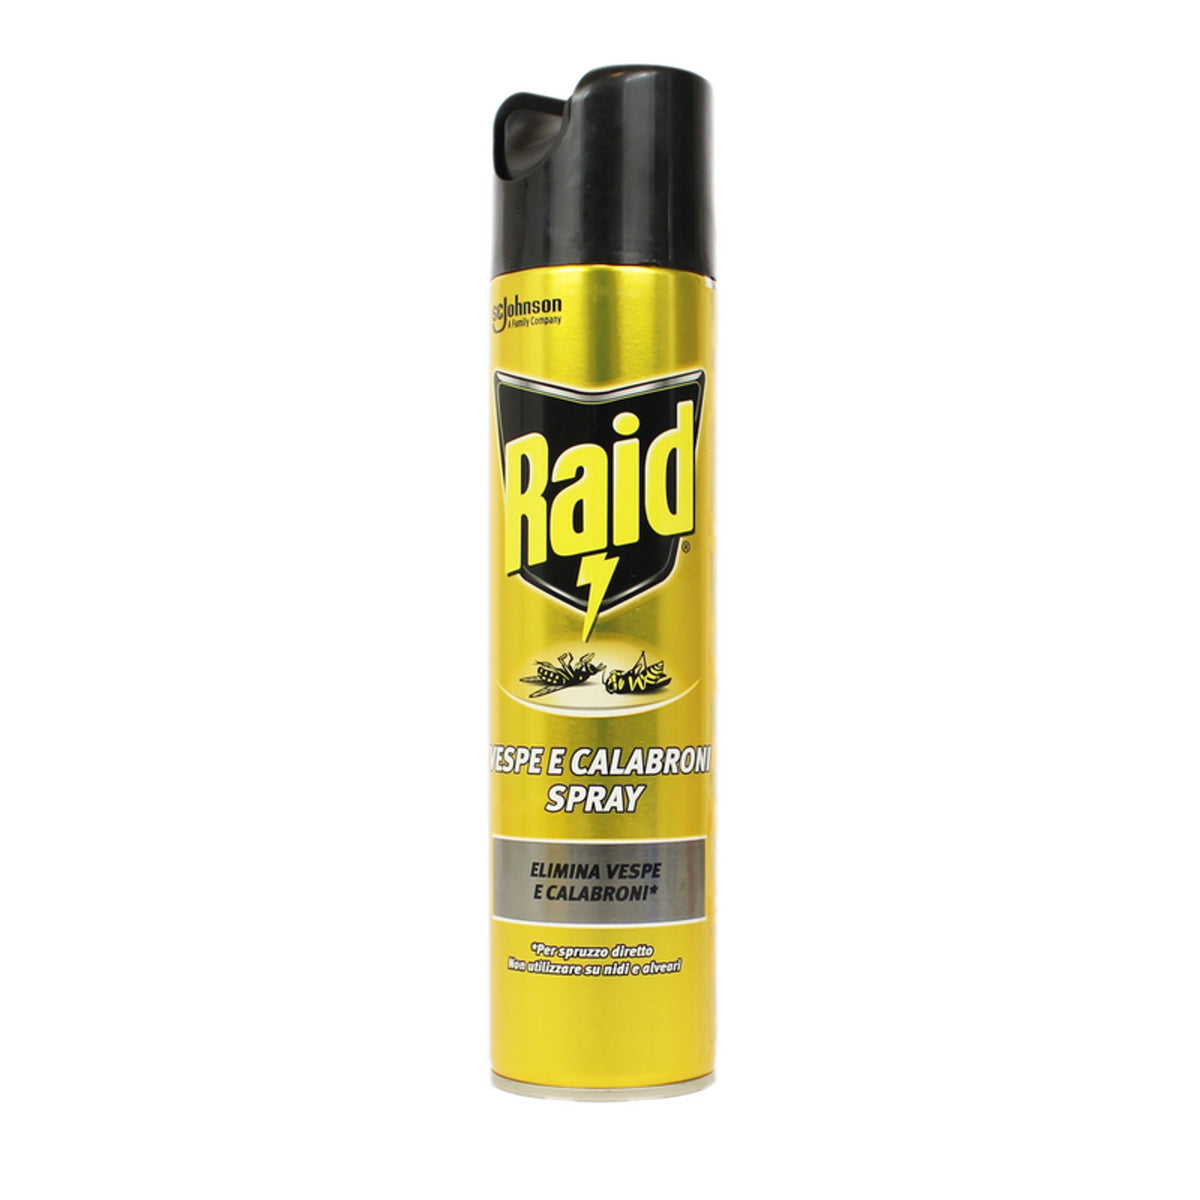 RAID Insecticide Vespe και Calabroni Spray 400 ml